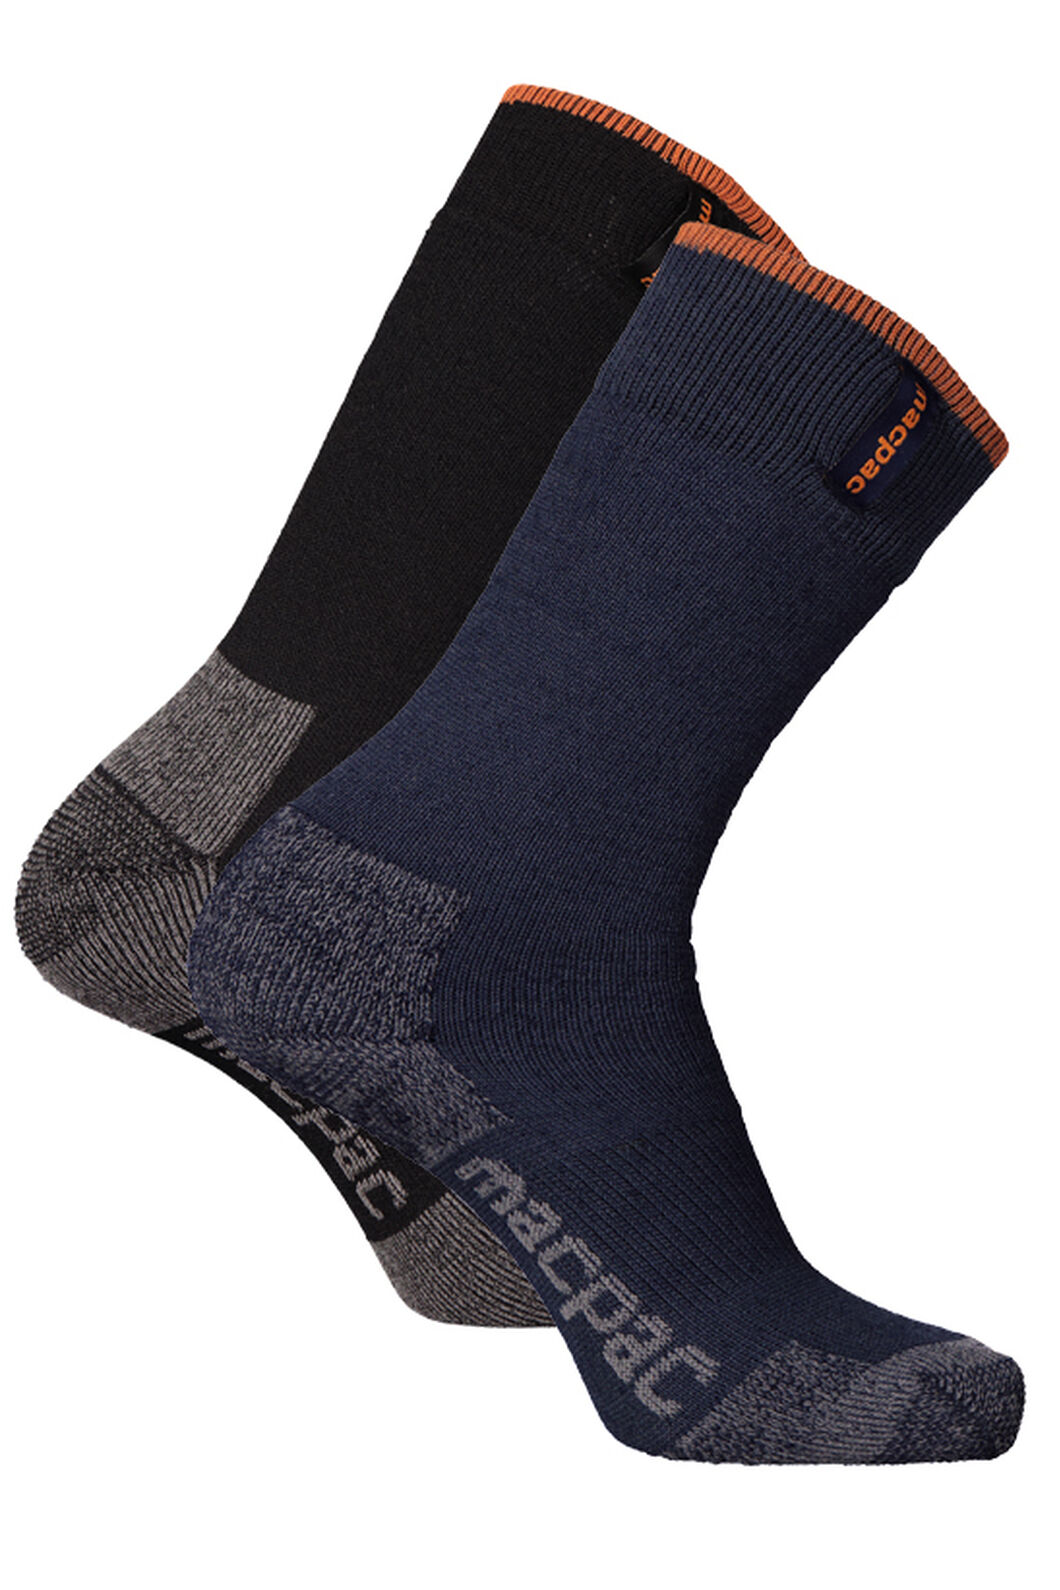 Macpac Thermal Socks 2 Pack | Macpac